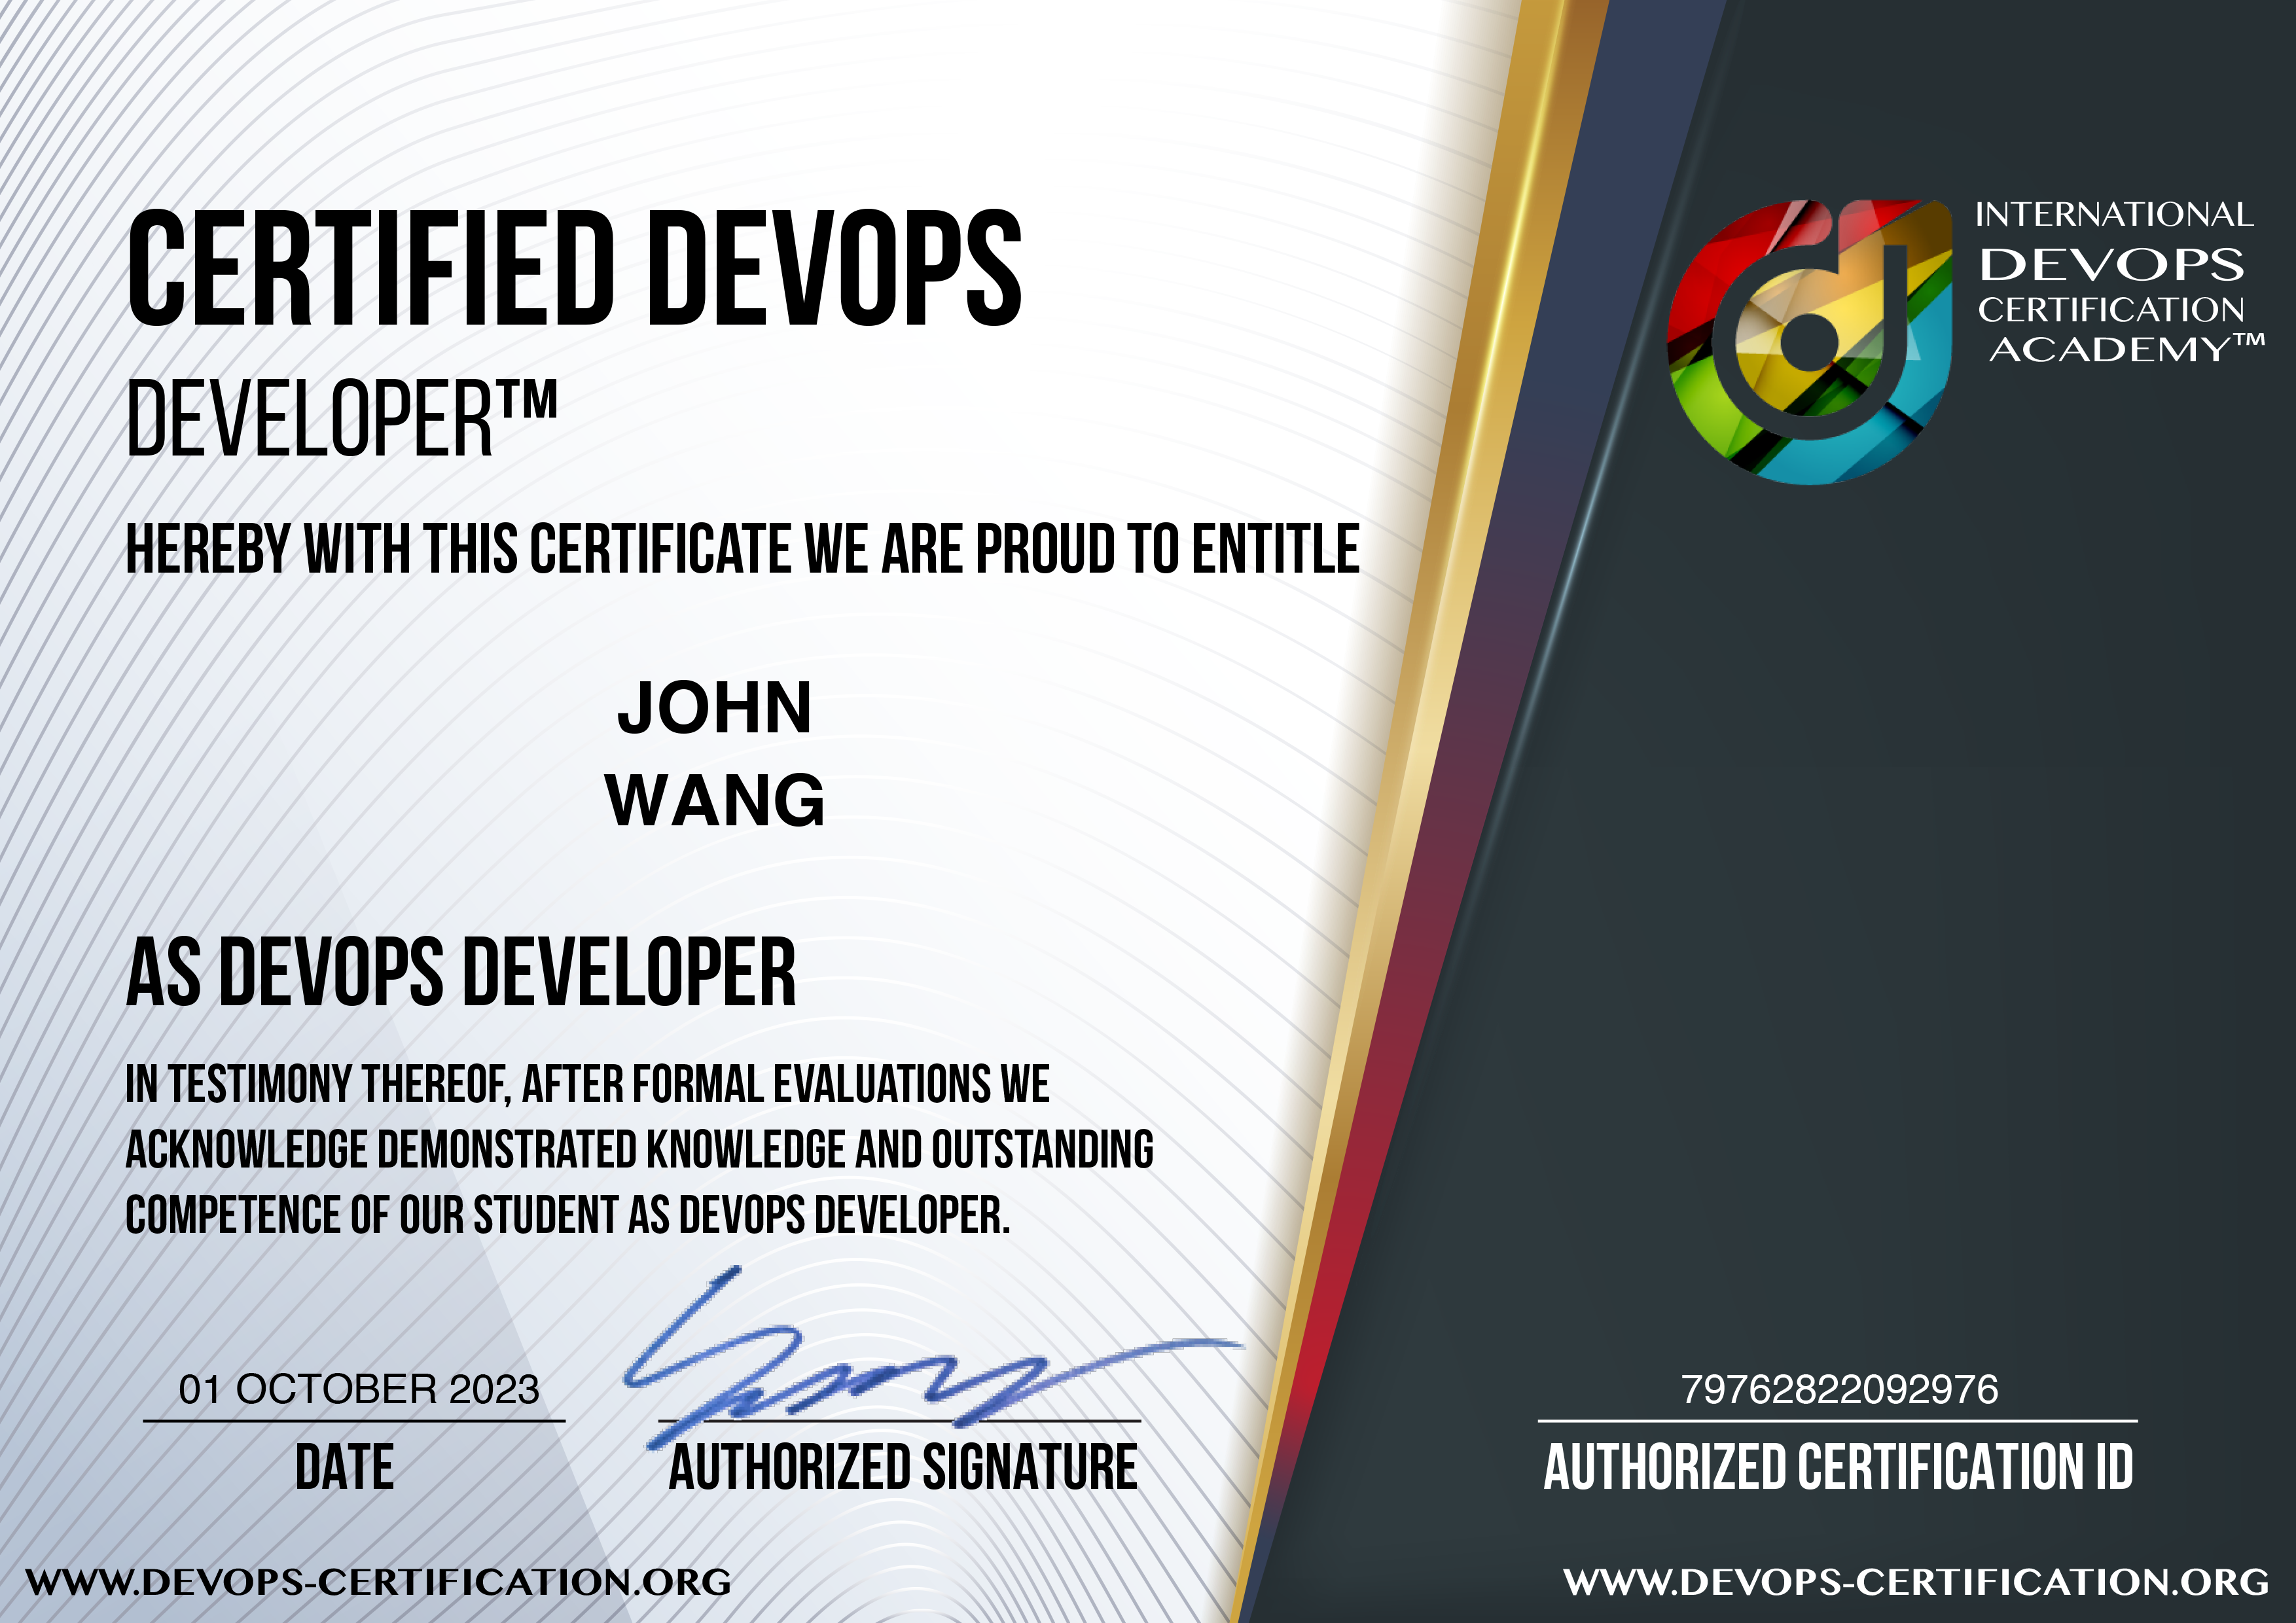 John's Certified DevOps Developer (DevOps-DEV) from DevOps Academy